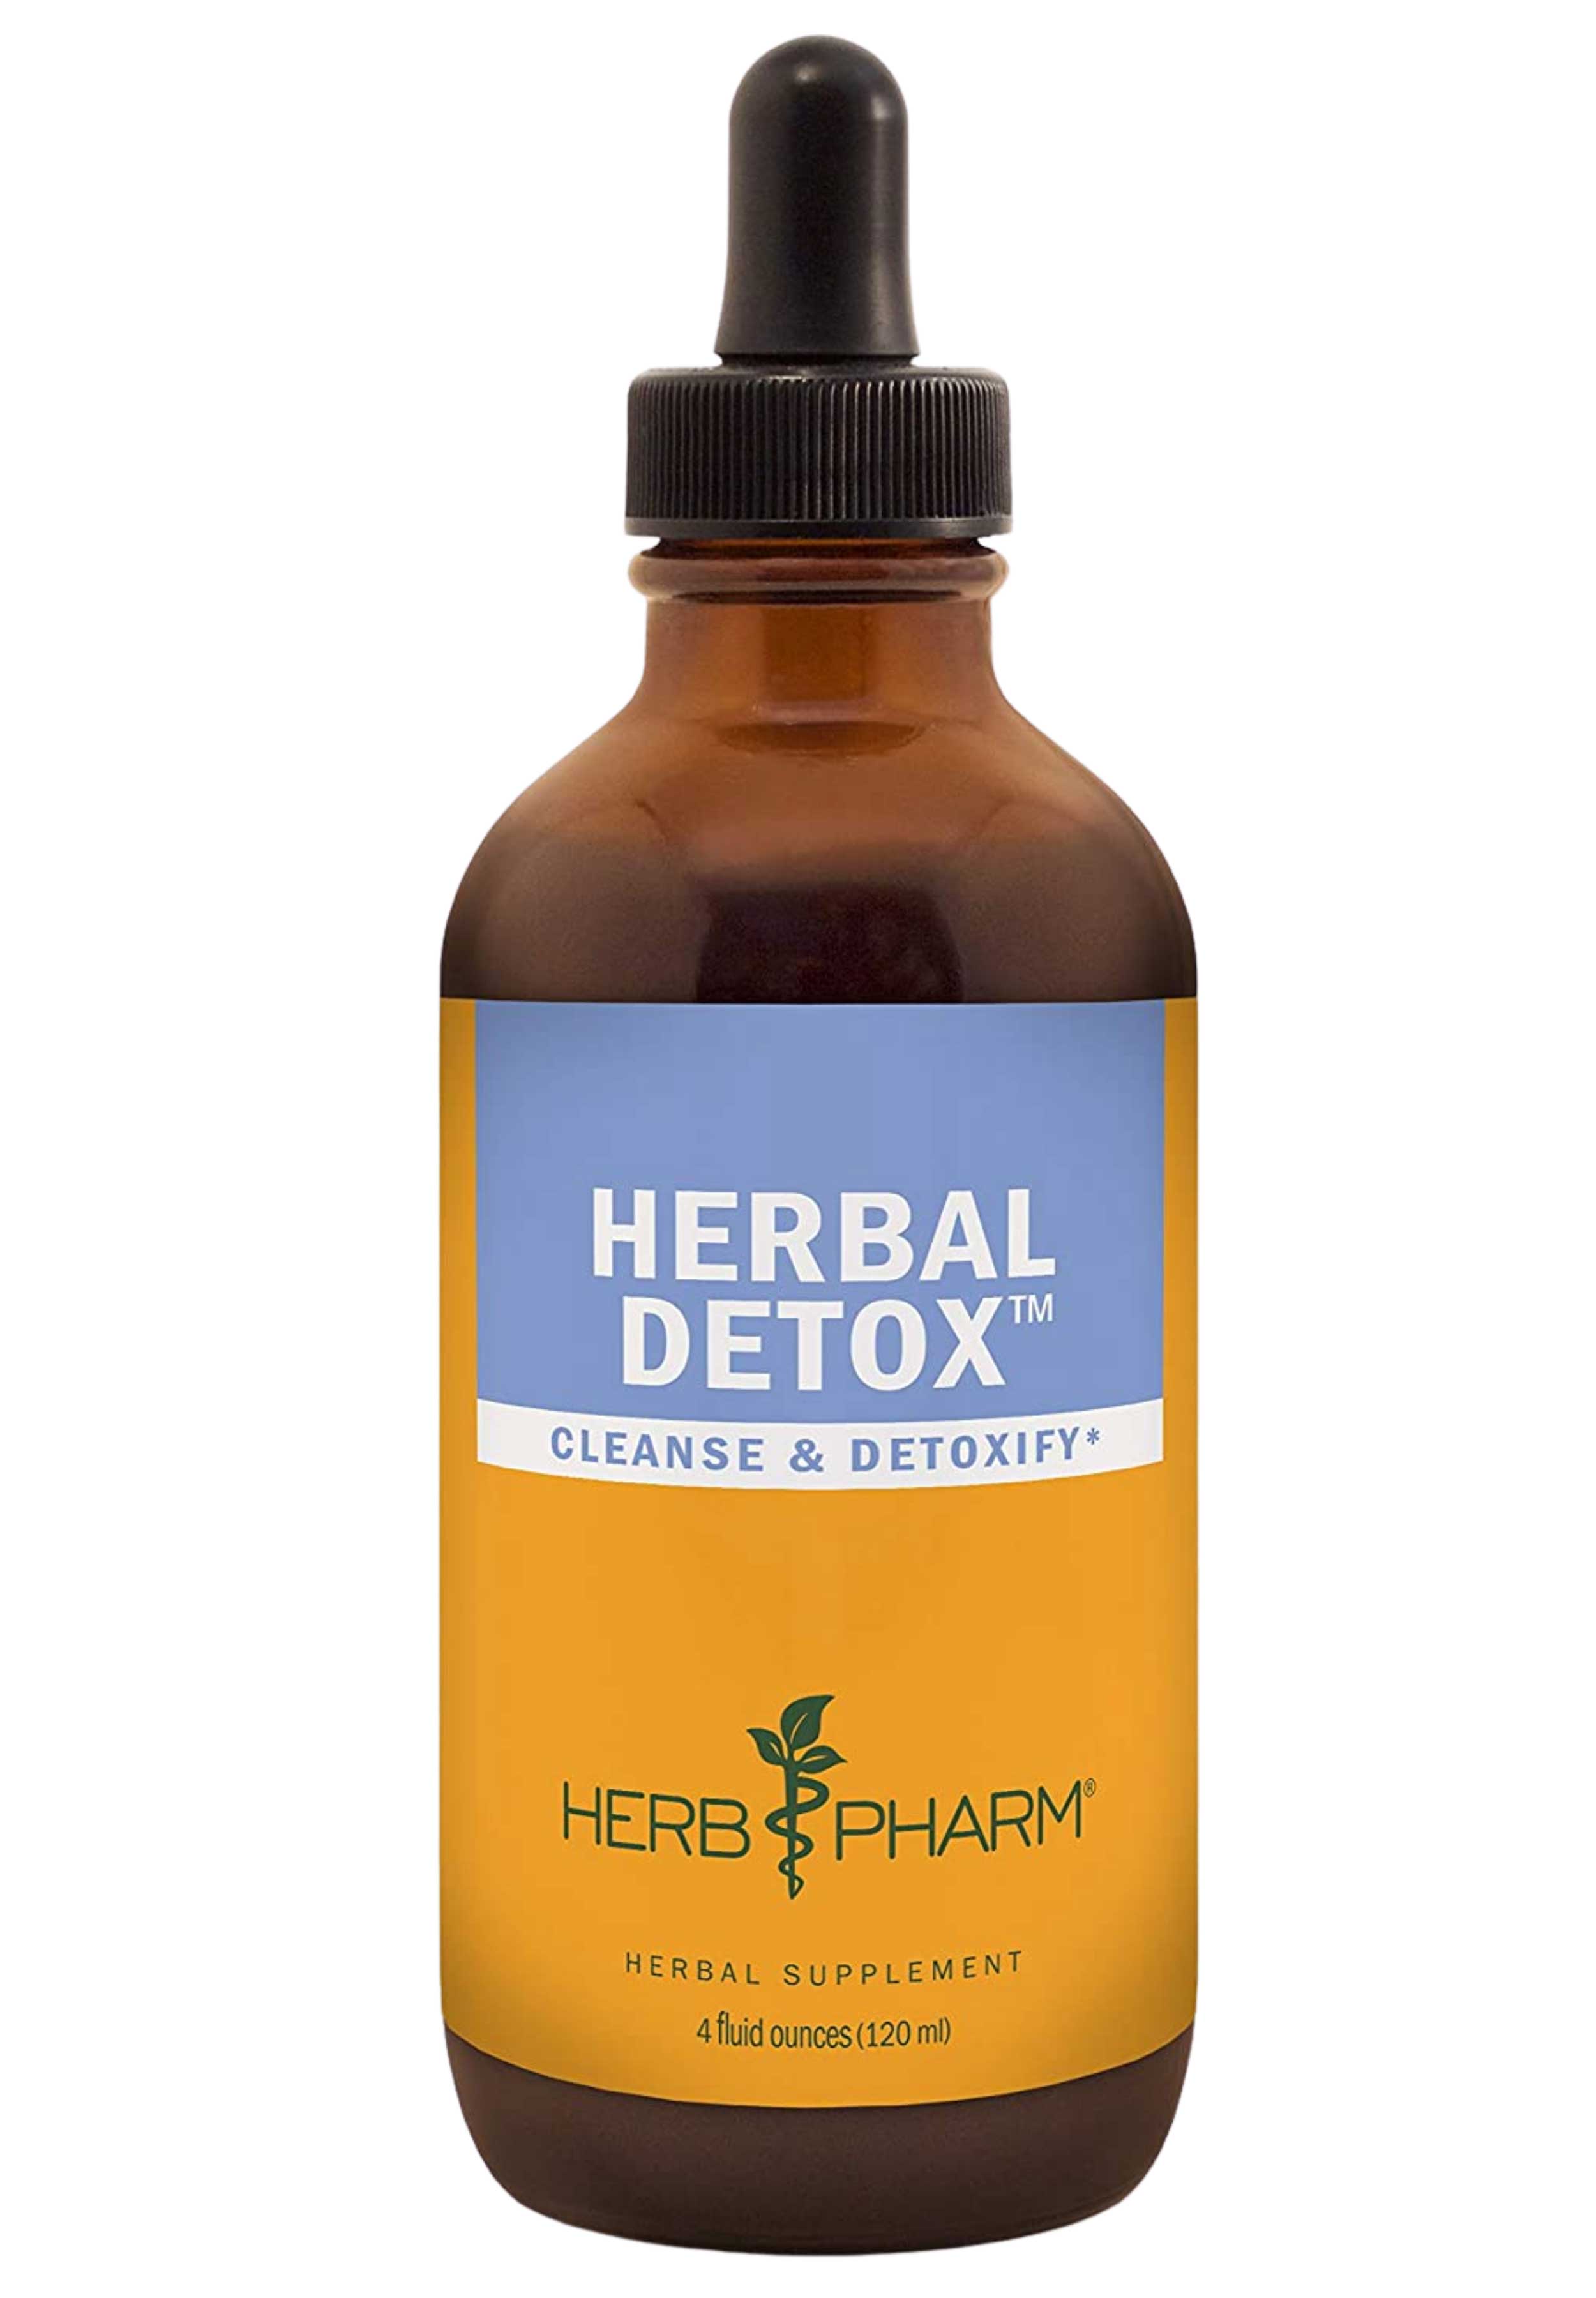 Herb Pharm Herbal Detox